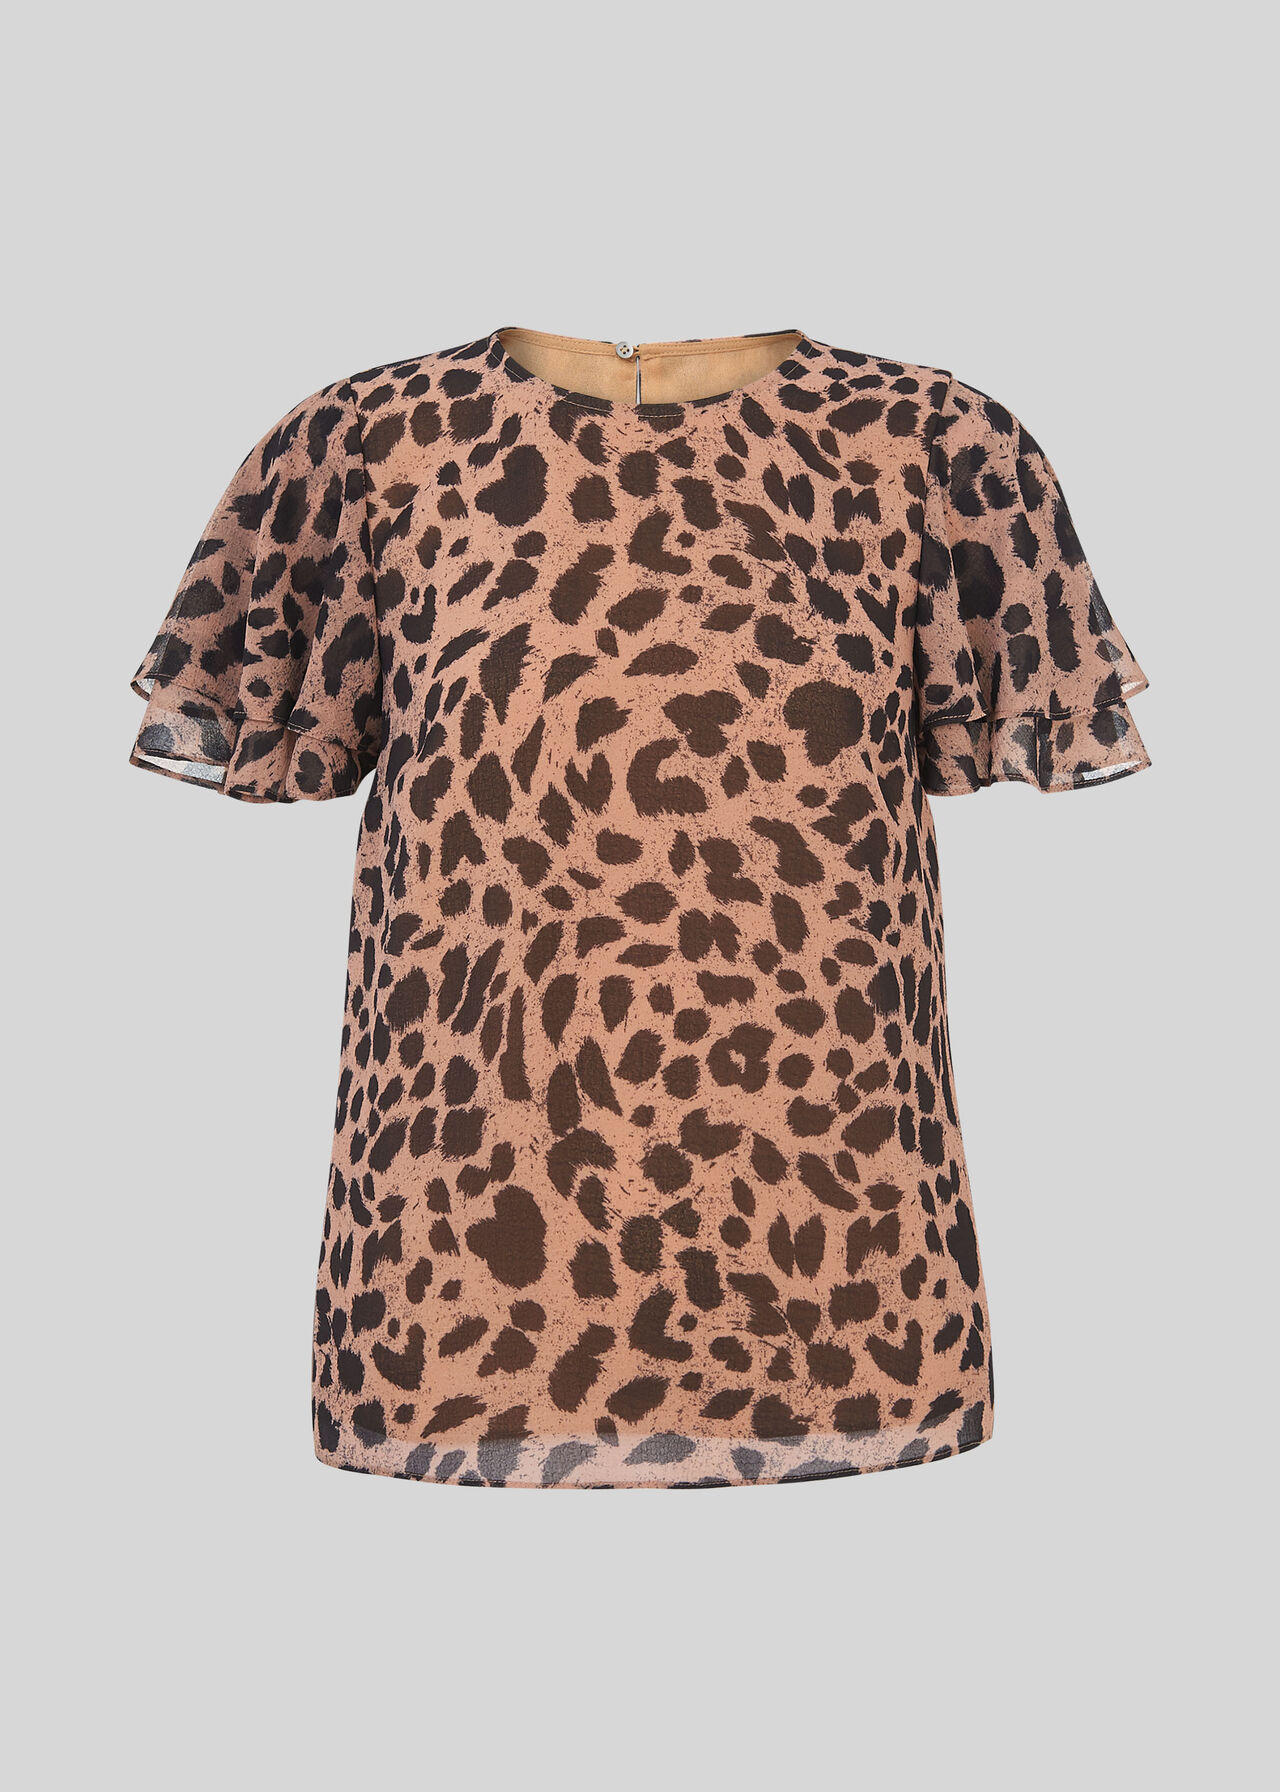 Brushed Cheetah Shell Top Leopard Print